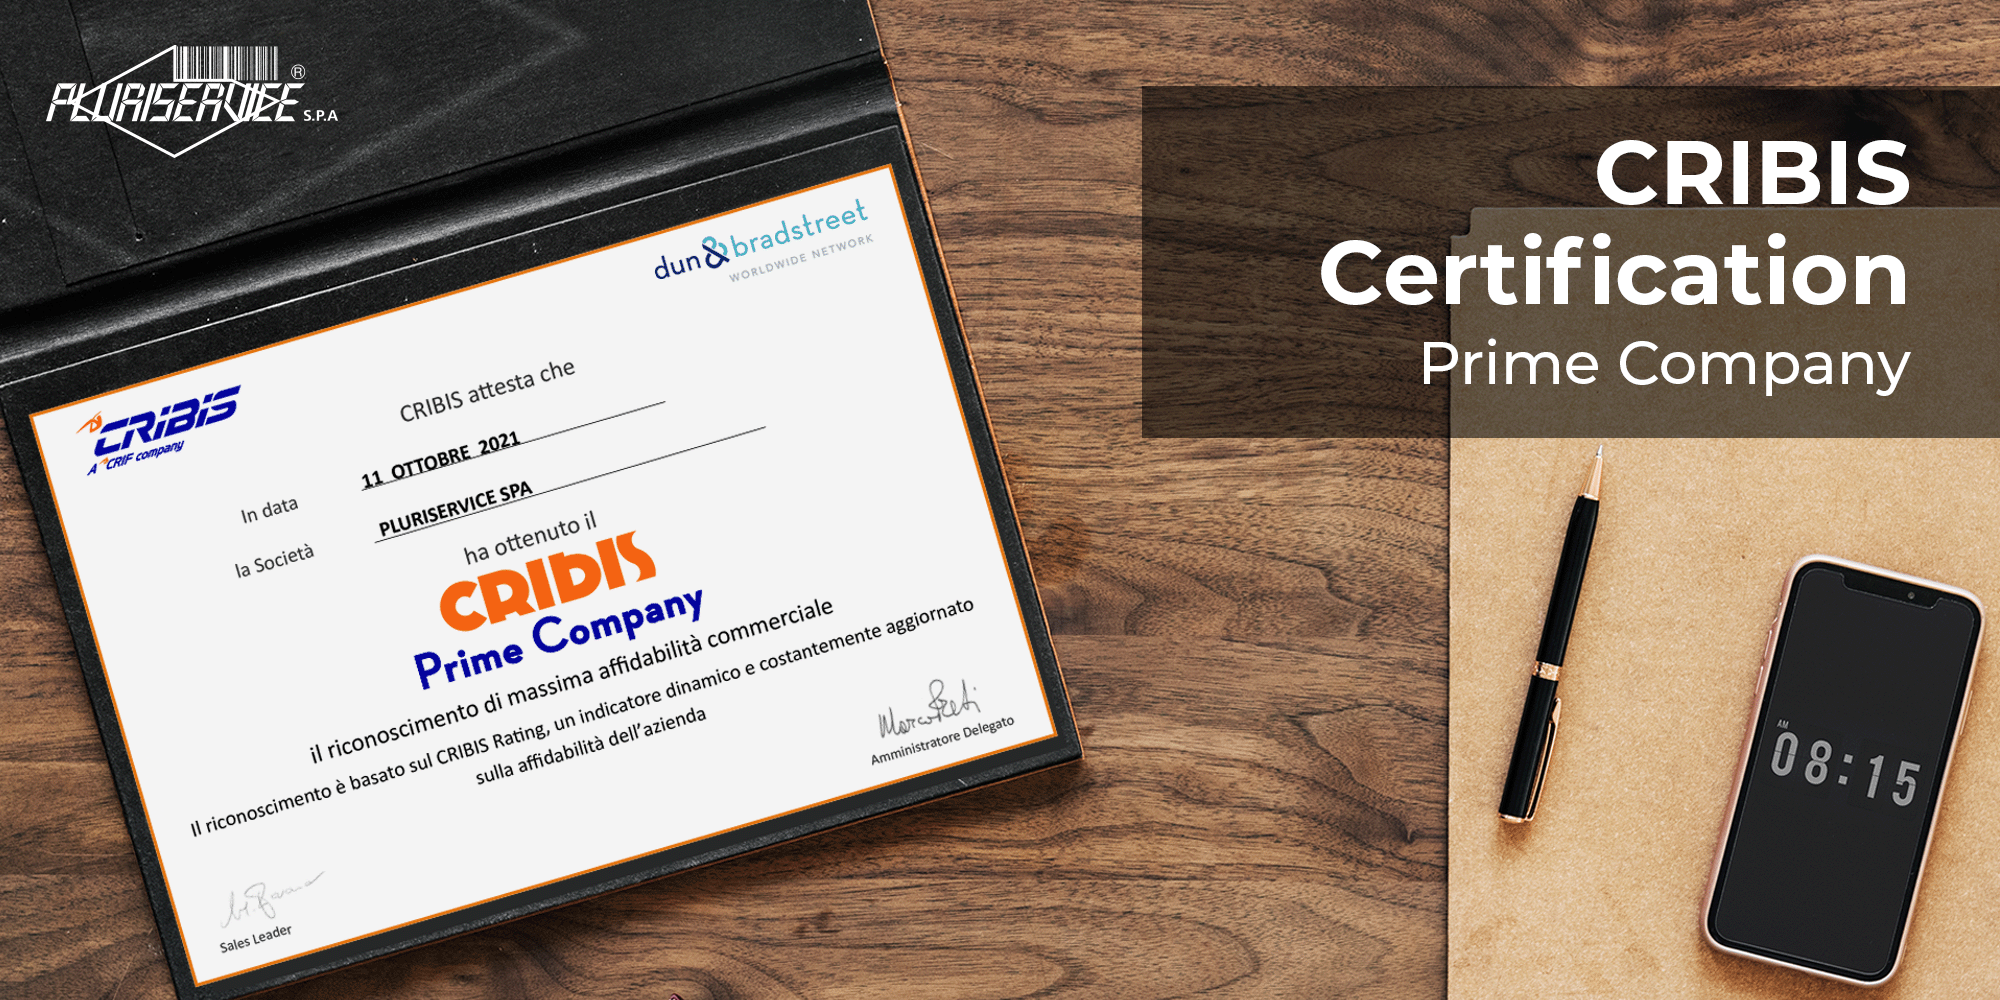 CRIBIS Certification, prime company